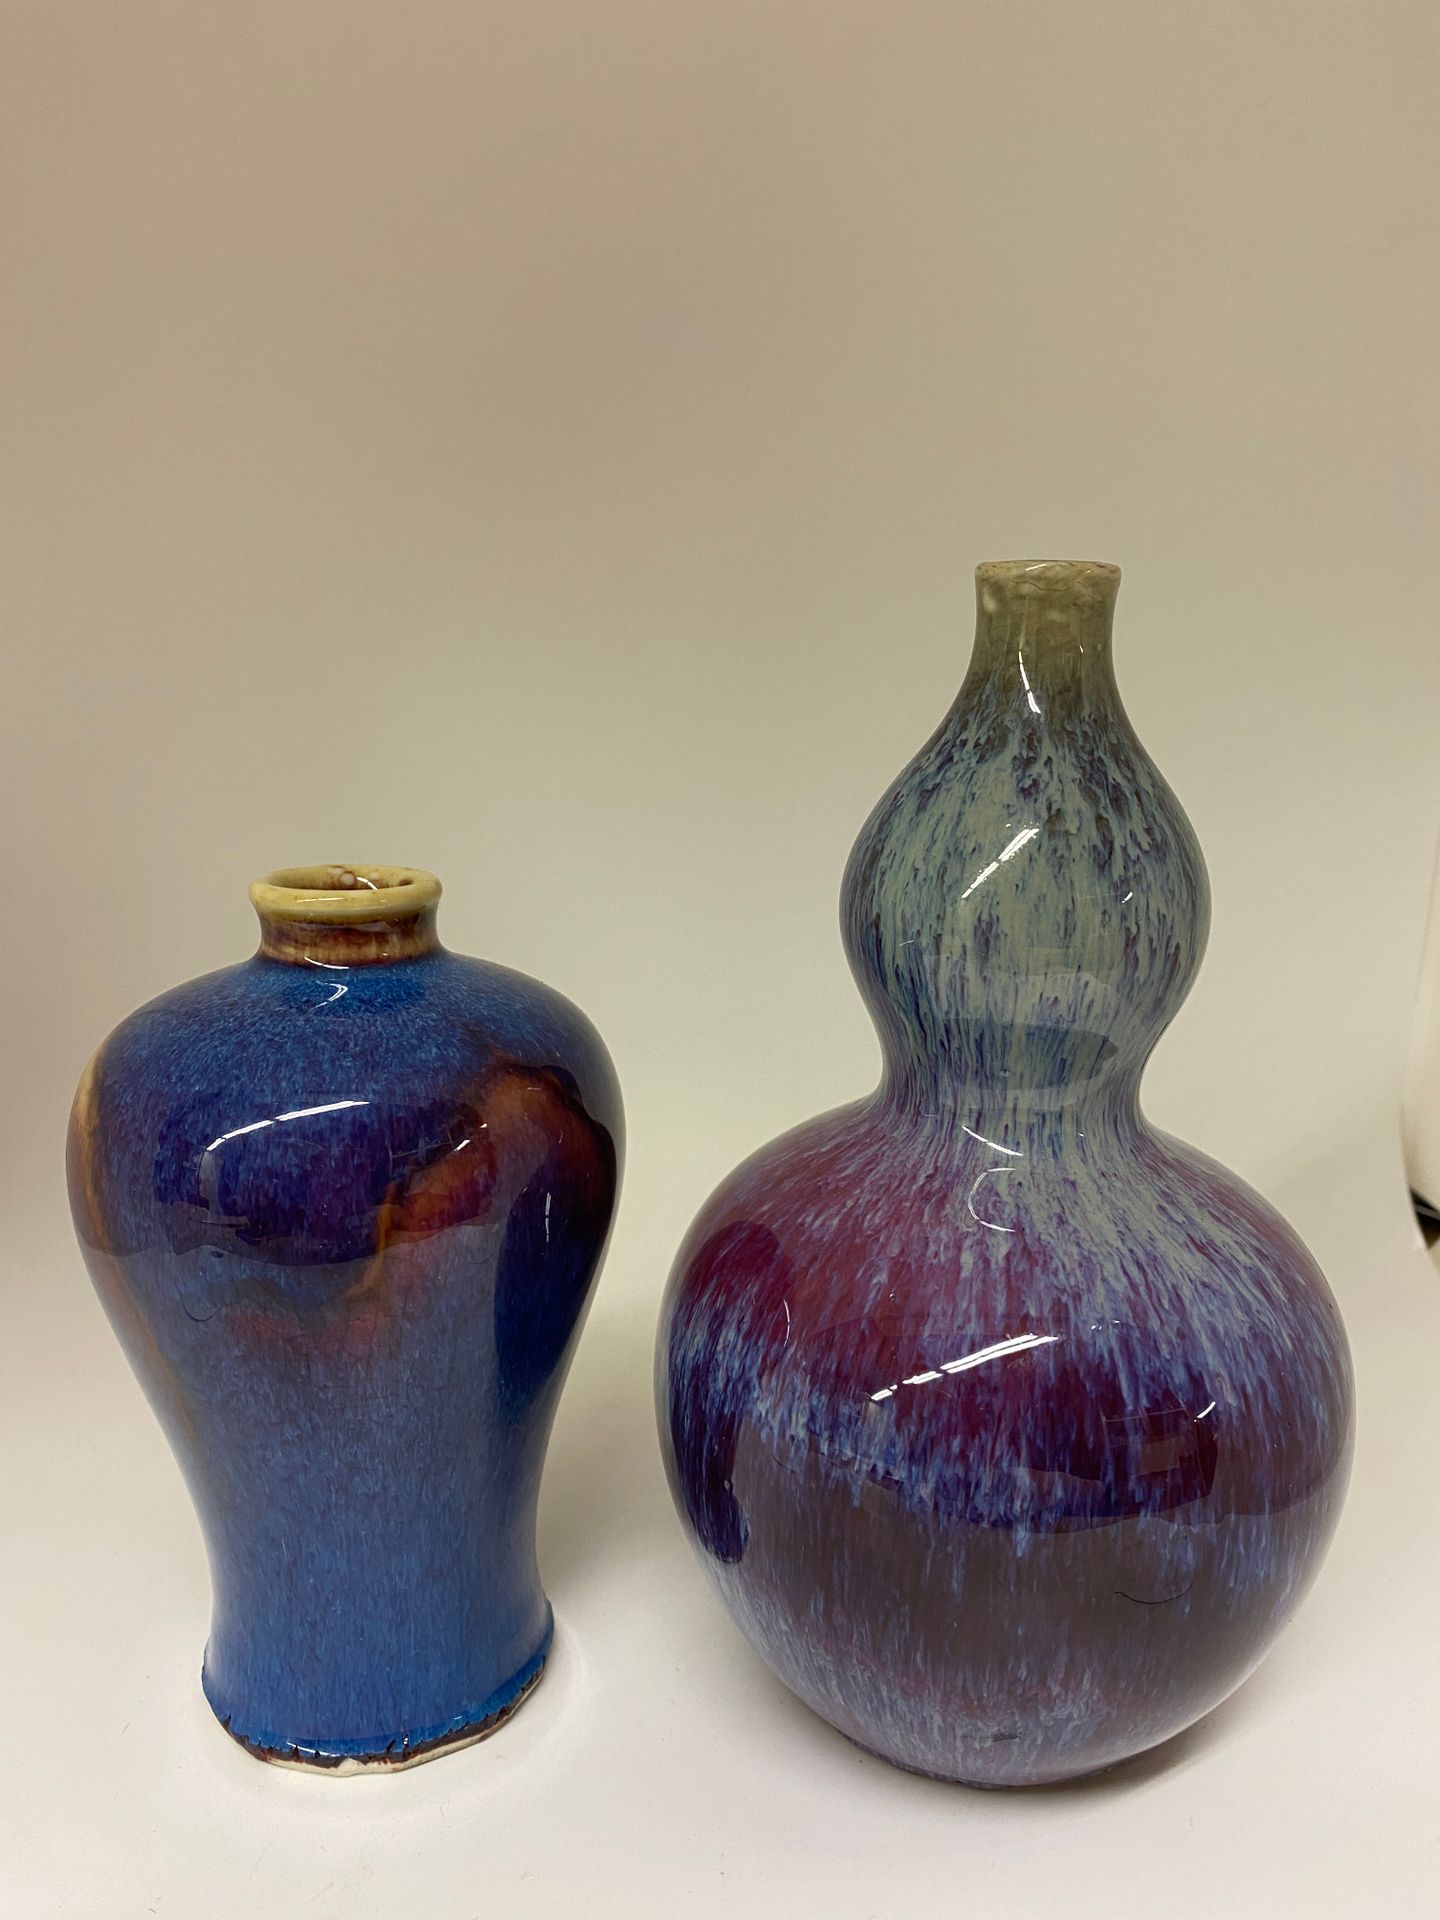 Null 中国
两个葫芦和梅花形的小瓷瓶，背景是单色的火焰。
H.13和18厘米。